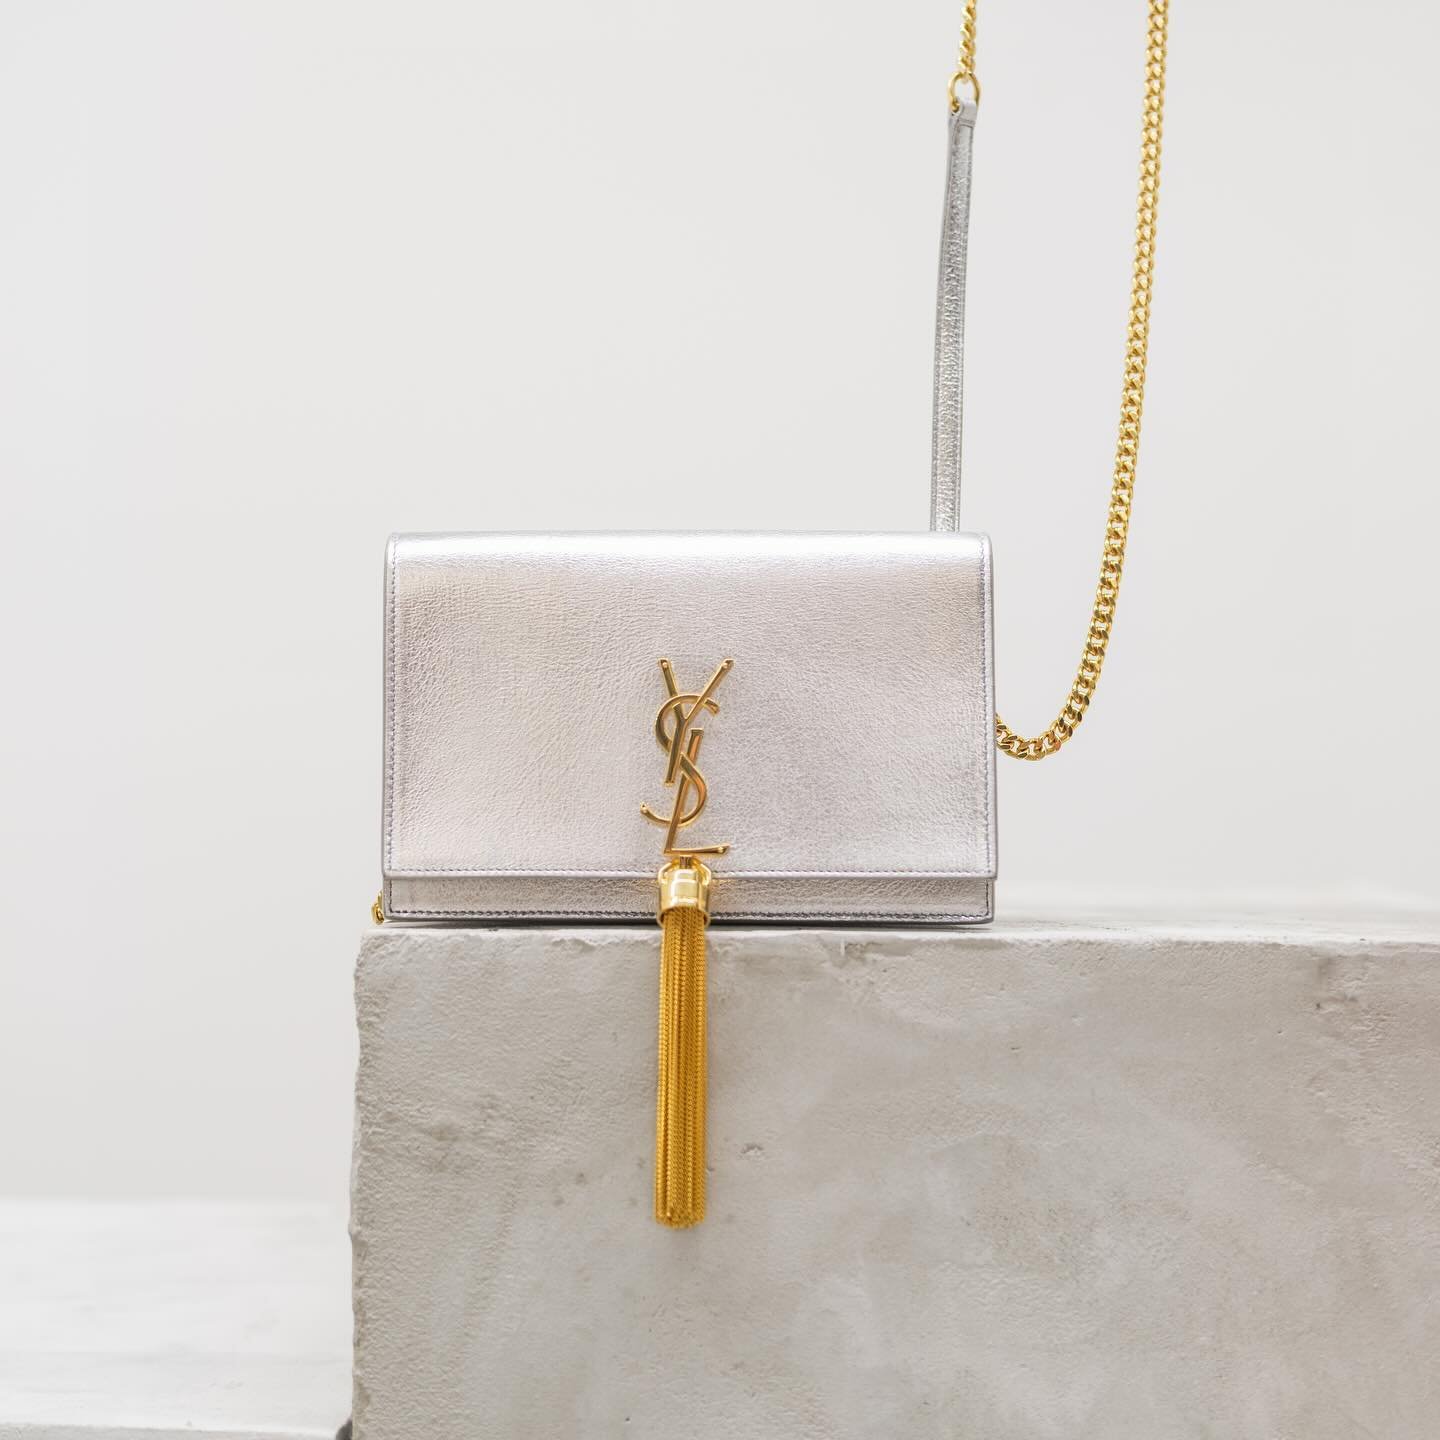 Staff Selects // the always essential #saintlaurentKate mini tassel crossbody 

Your go-to evening bag // DM for Info 

#yslbag #saintlaurentbag #yslkate #yslkatebag #designerresale #designerconsignment #luxuryresale #luxuryconsignment #luxuryprelove